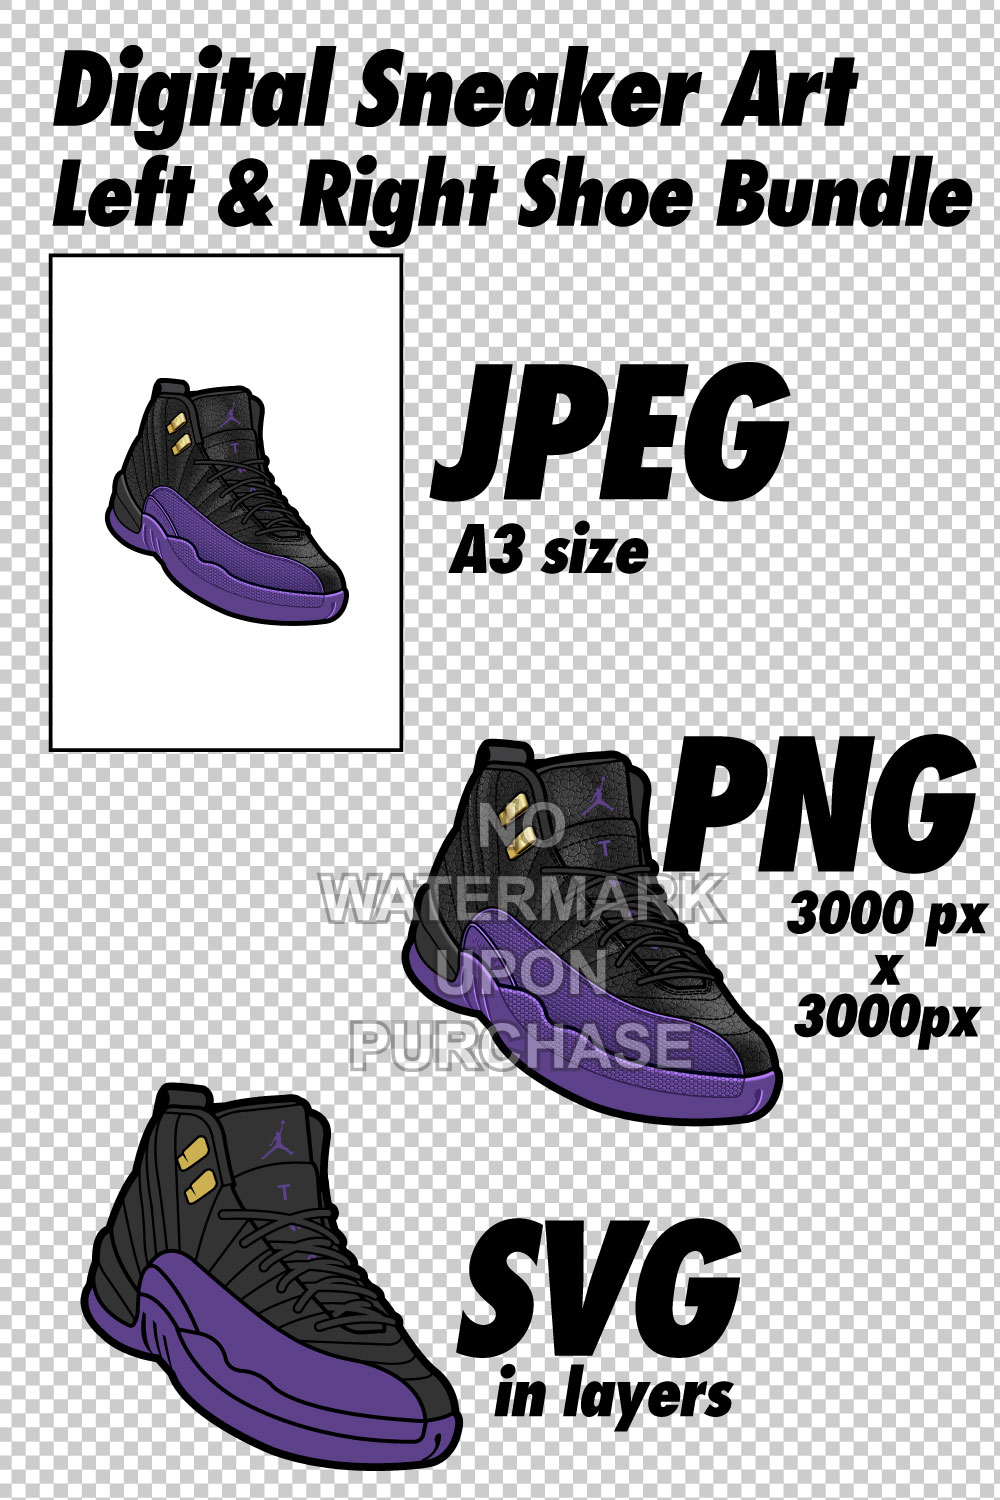 Air Jordan 12 Field Purple JPEG PNG SVG Sneaker Art right & left shoe bundle digital download pinterest preview image.